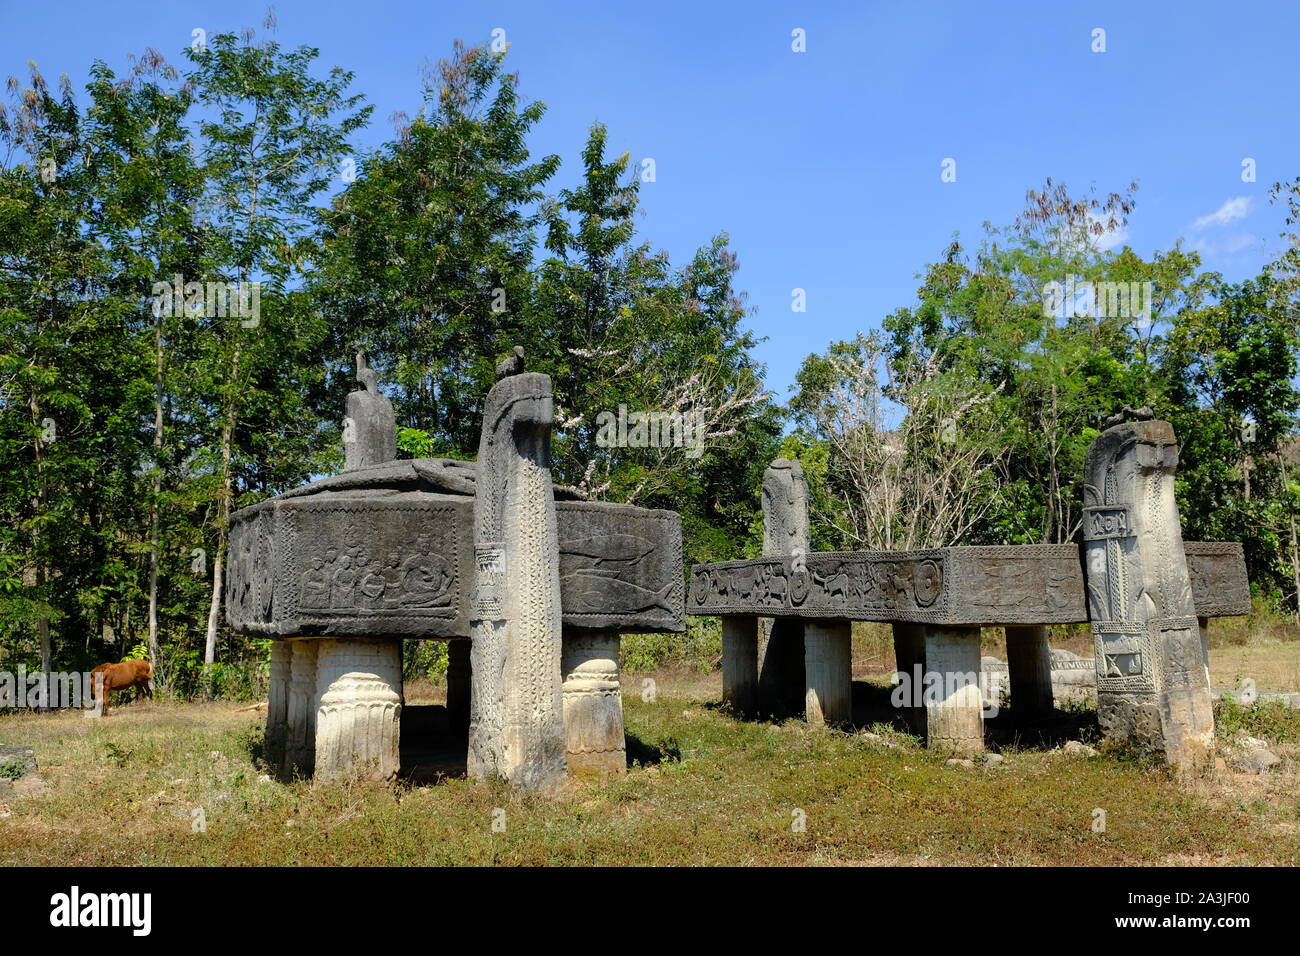 Indonesia Sumba traditional Raja stone tombs Stock Photo